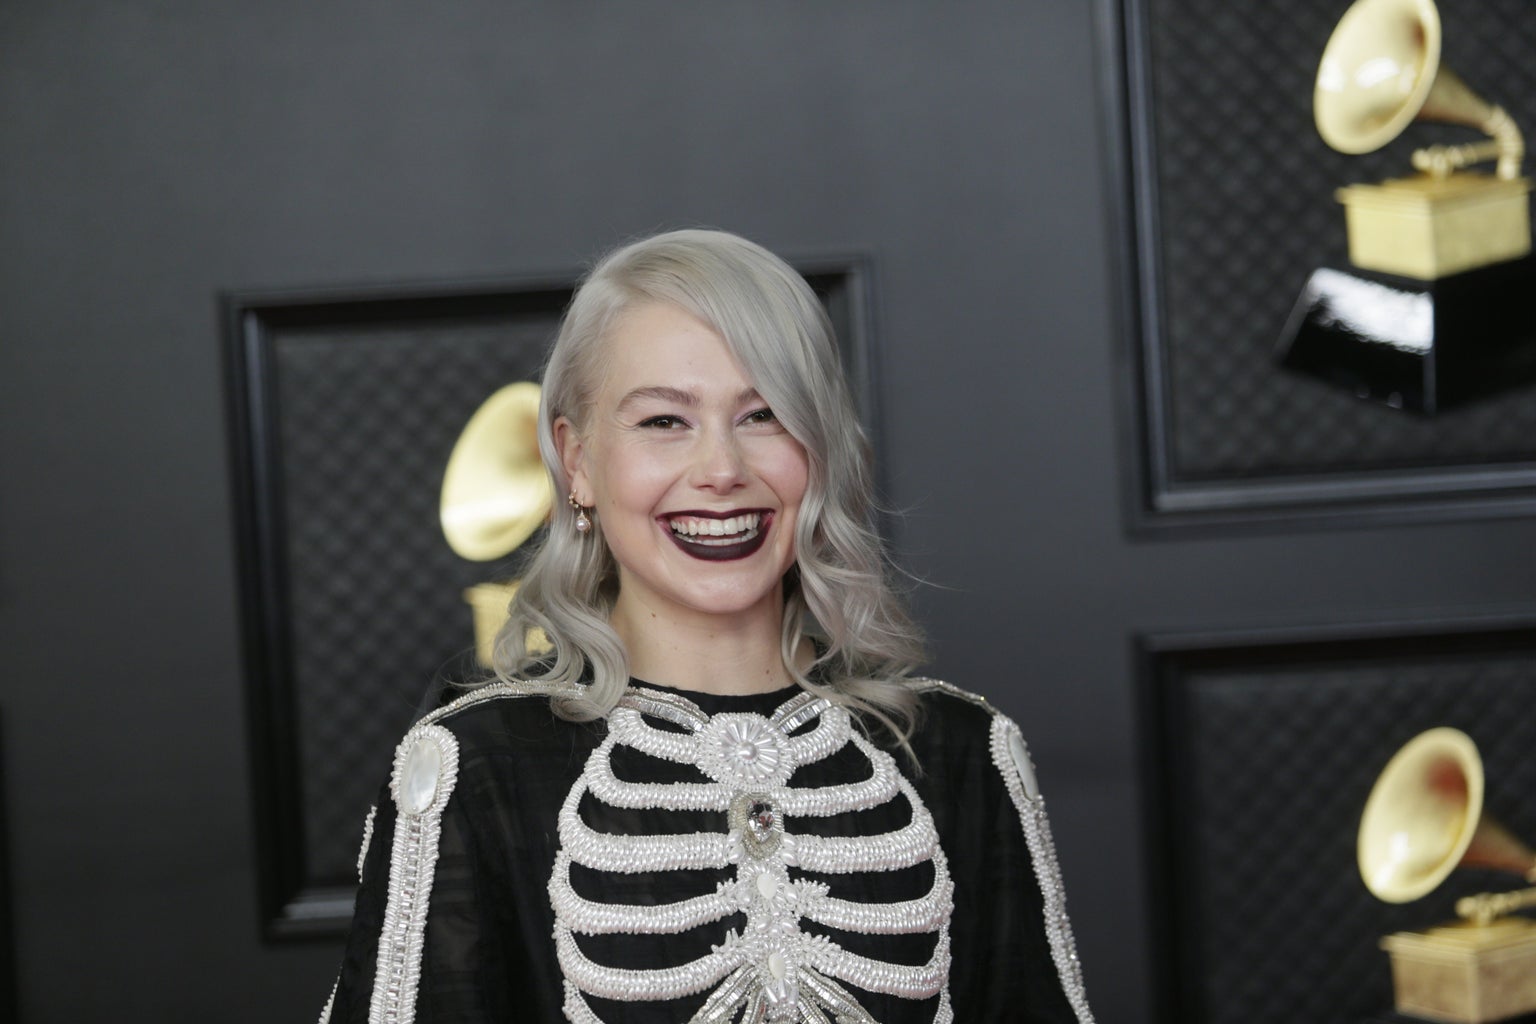 Phoebe Bridgers at the 2021 Grammy Awards Red Carpet